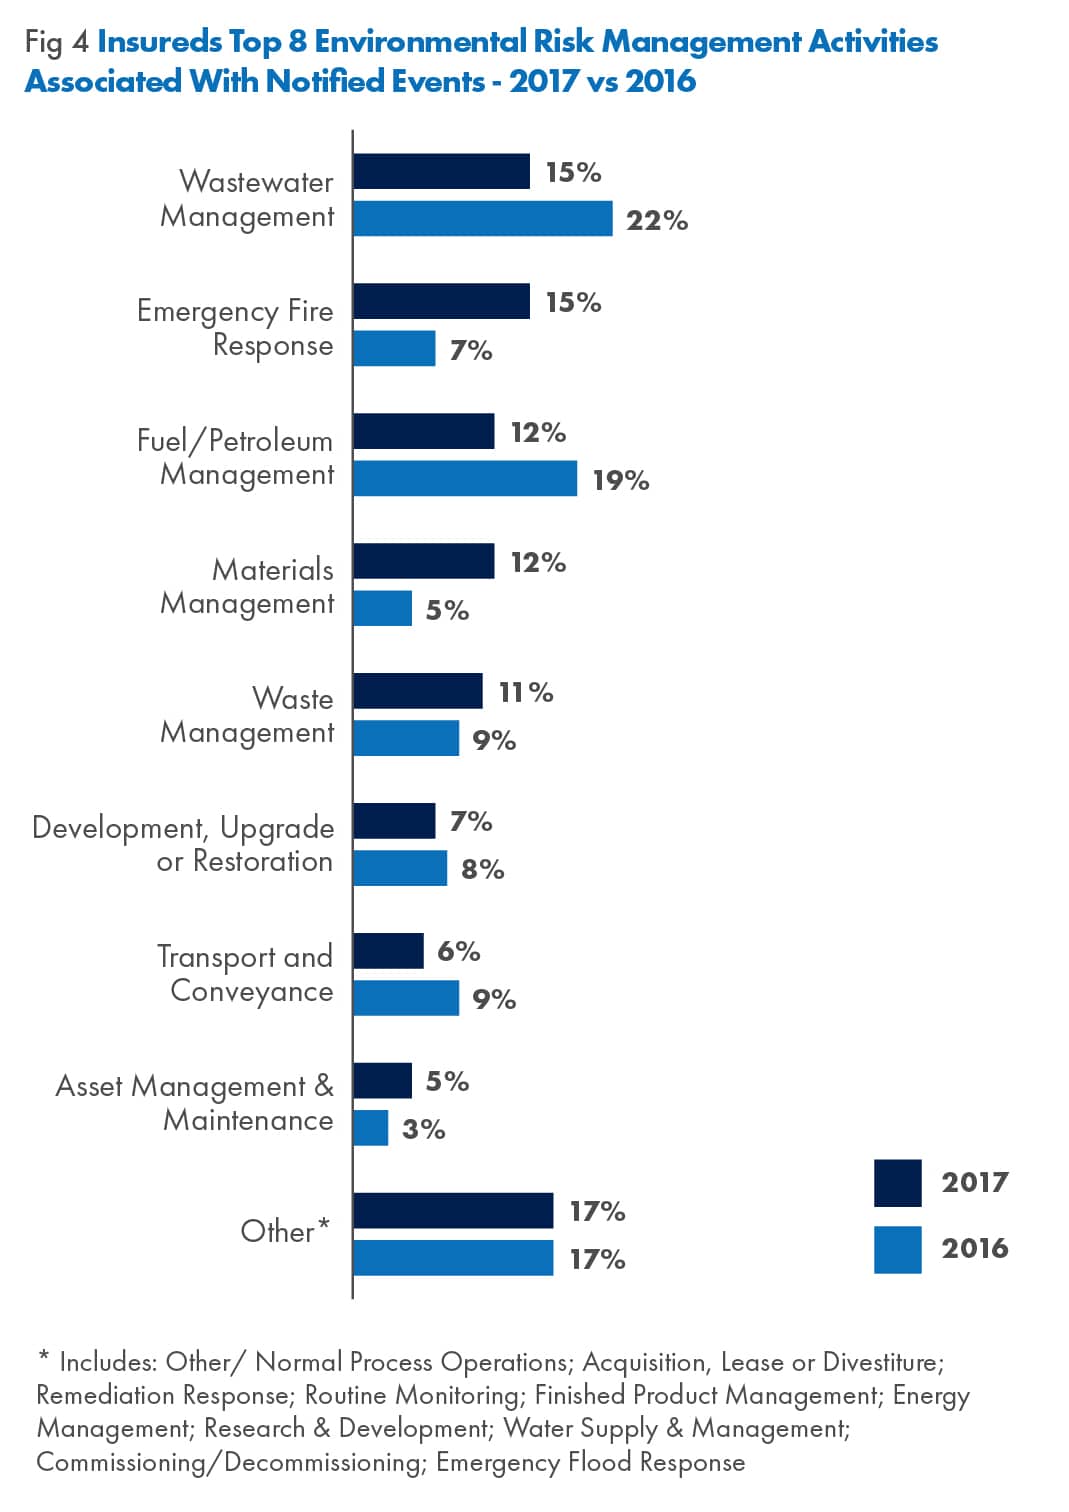 Top 8 environmental risk management acitivities 2017 vs. 2016